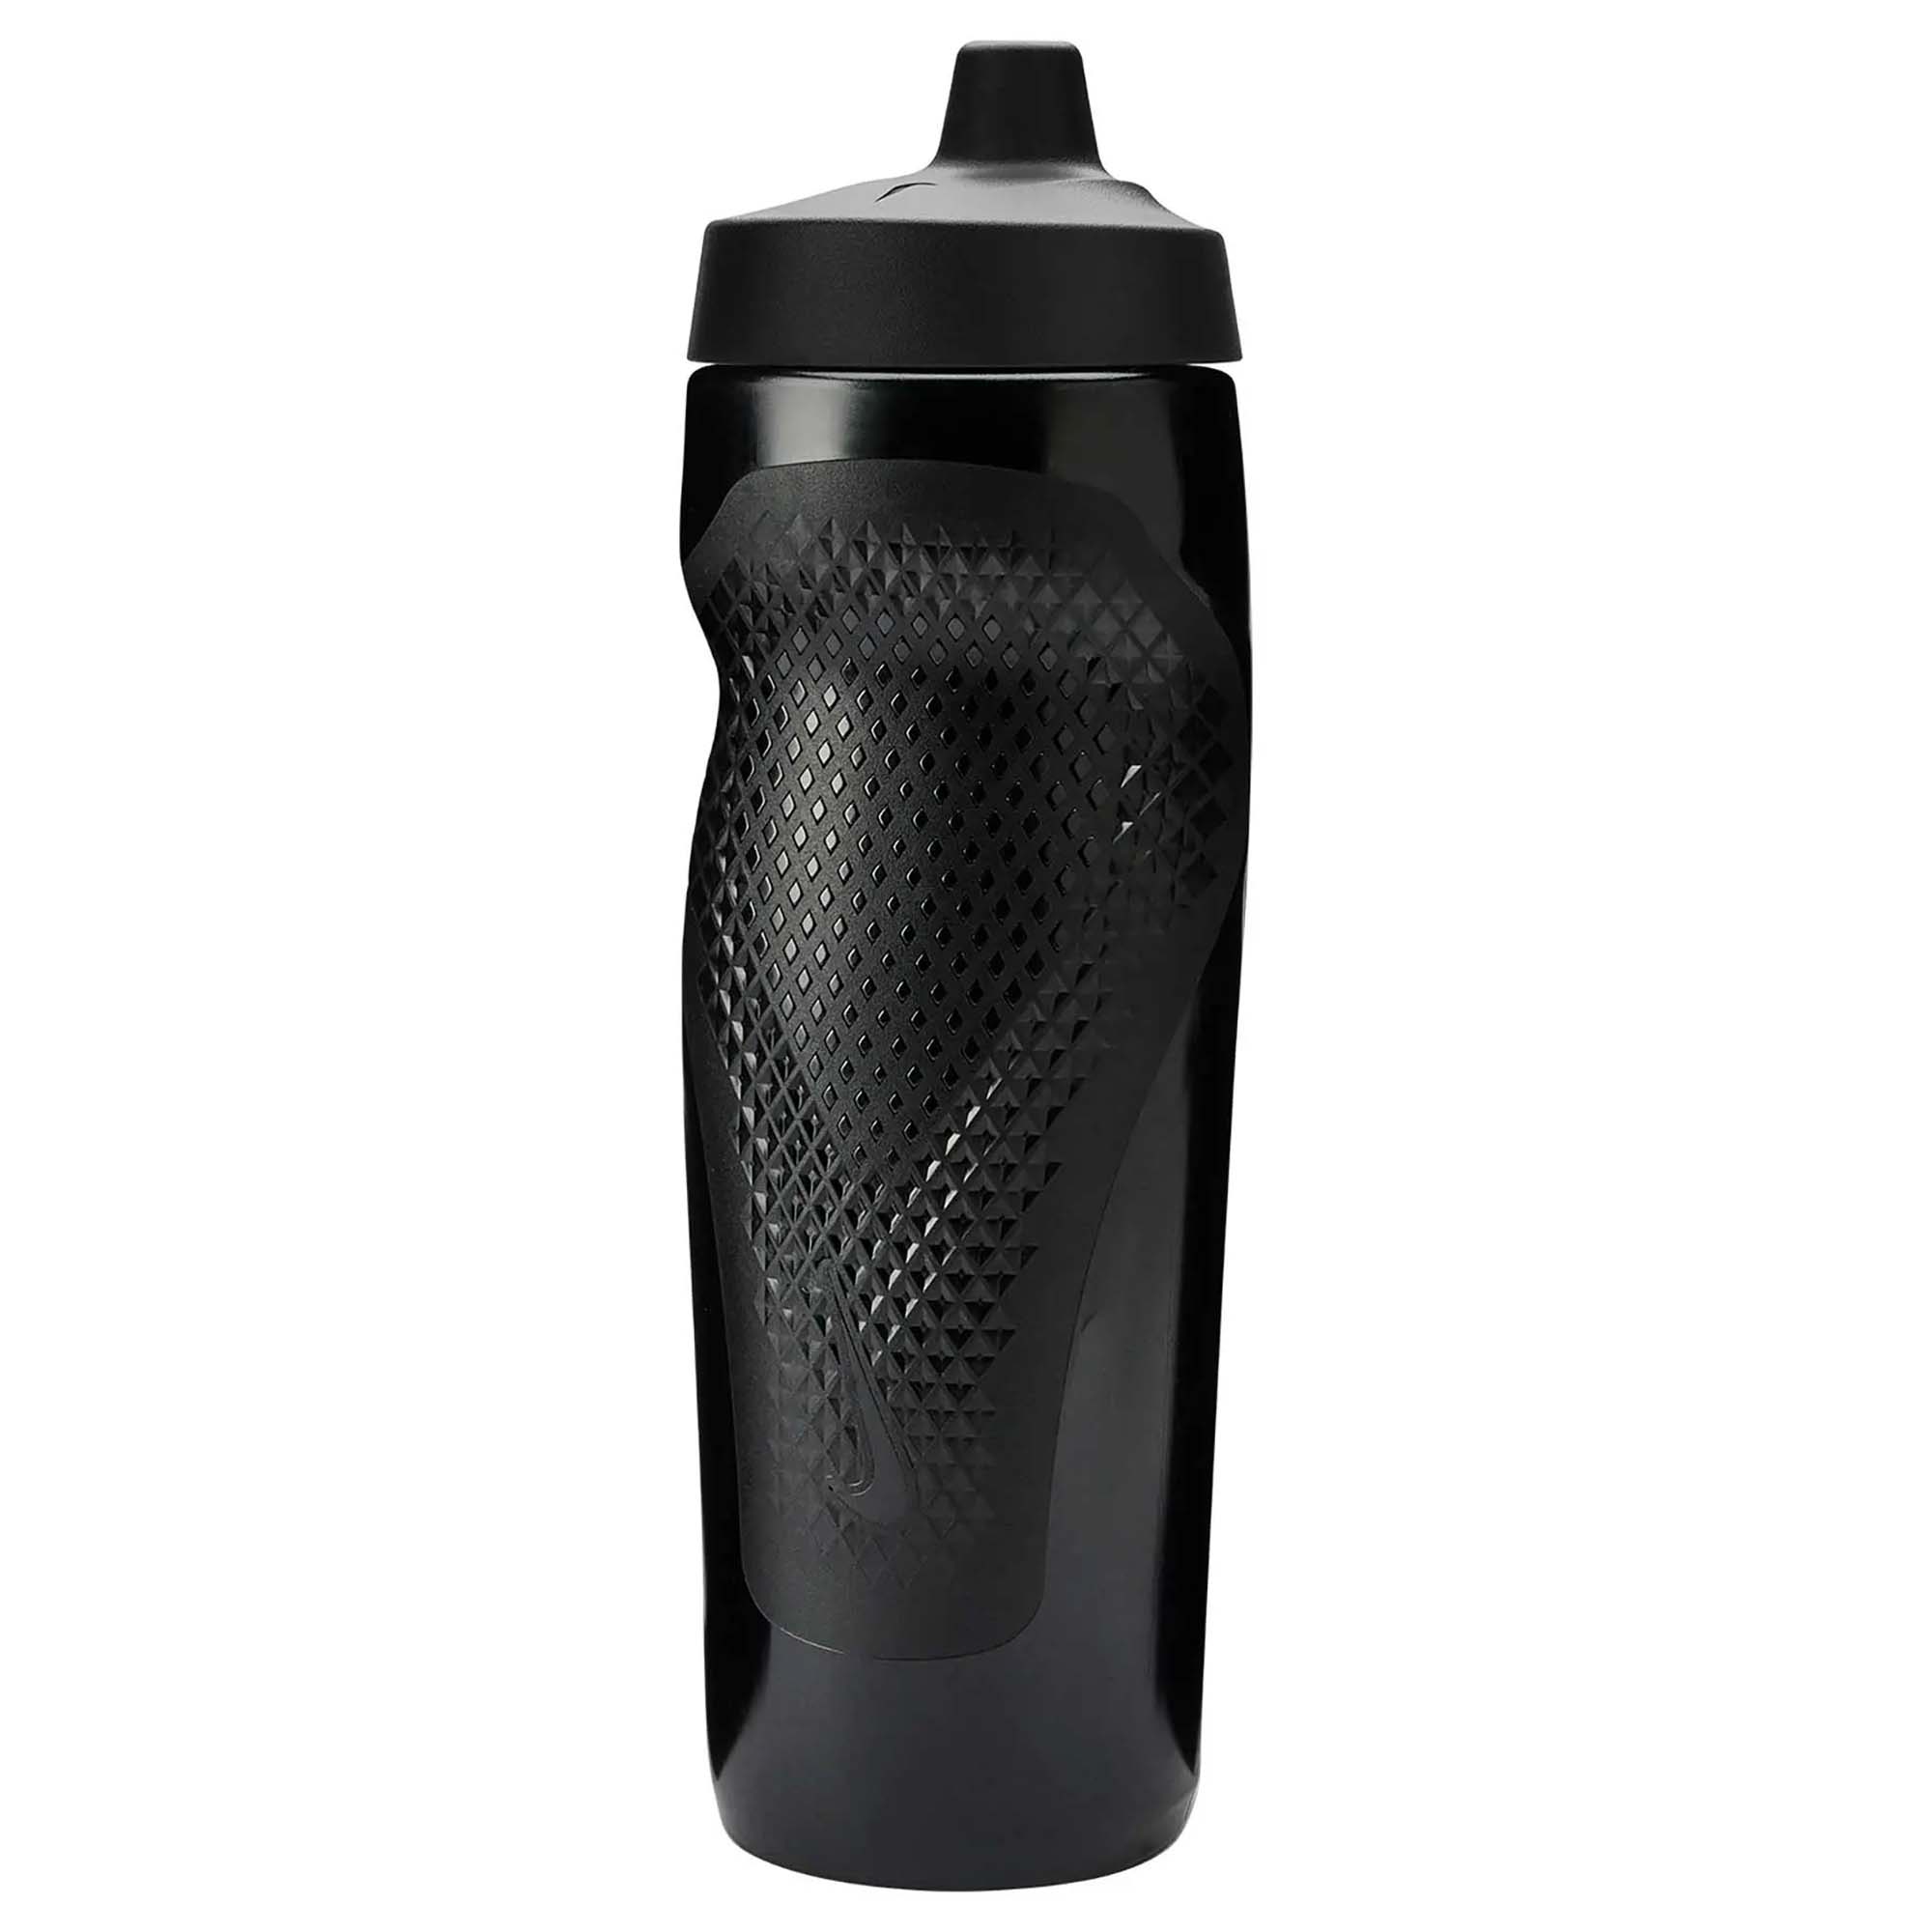 Nike accessoires nike Refuel Bottle Grip 24 oz